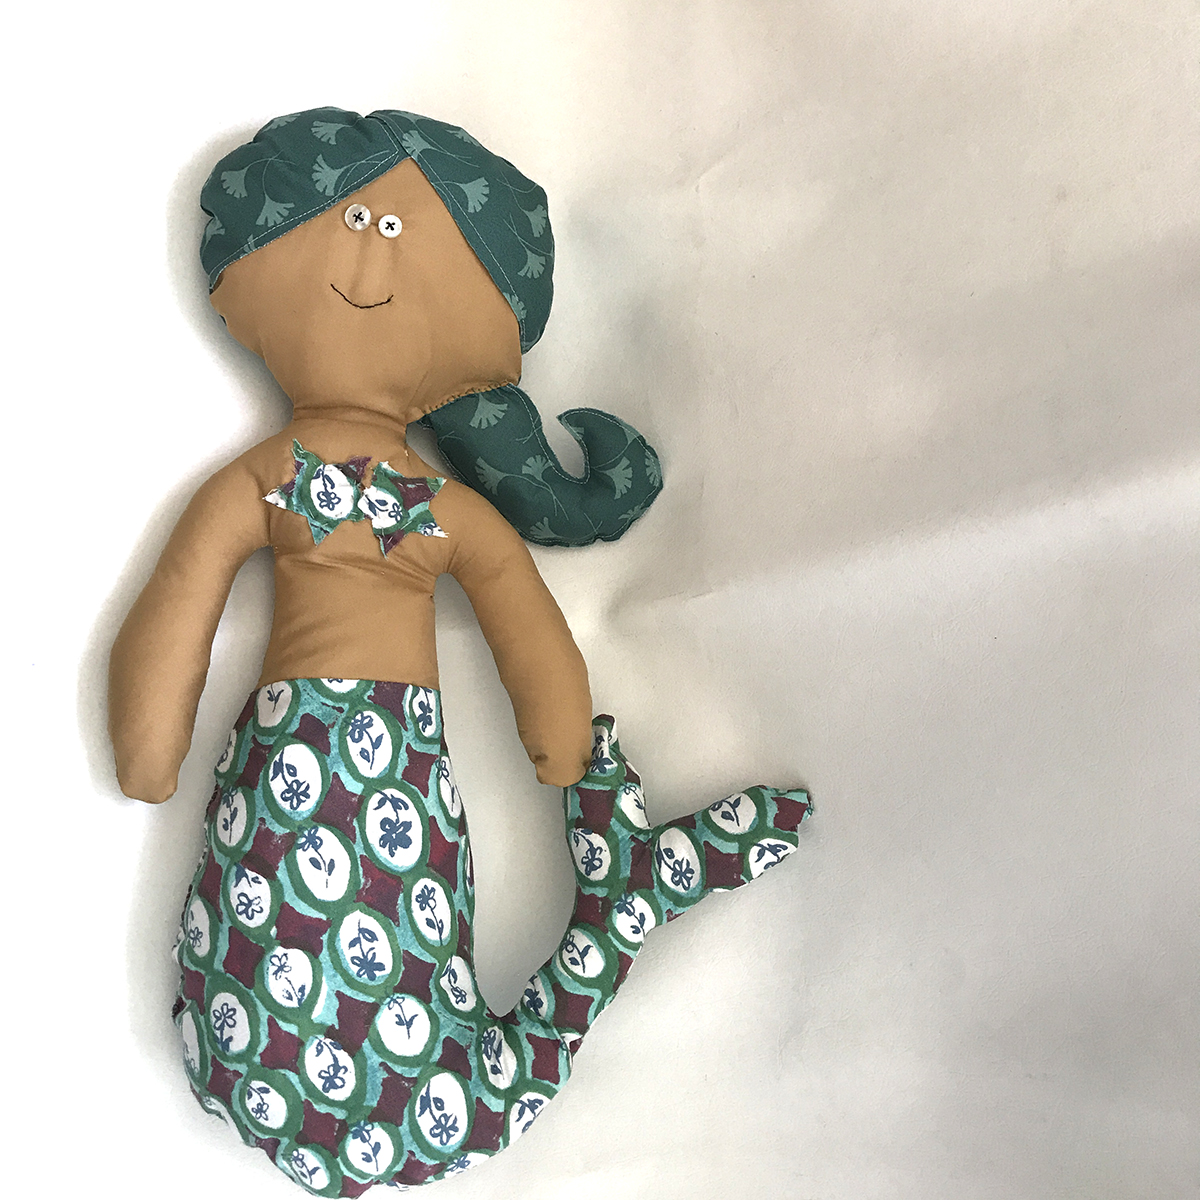 sew a cute toy PDF Miranda Mermaid doll sewing pattern